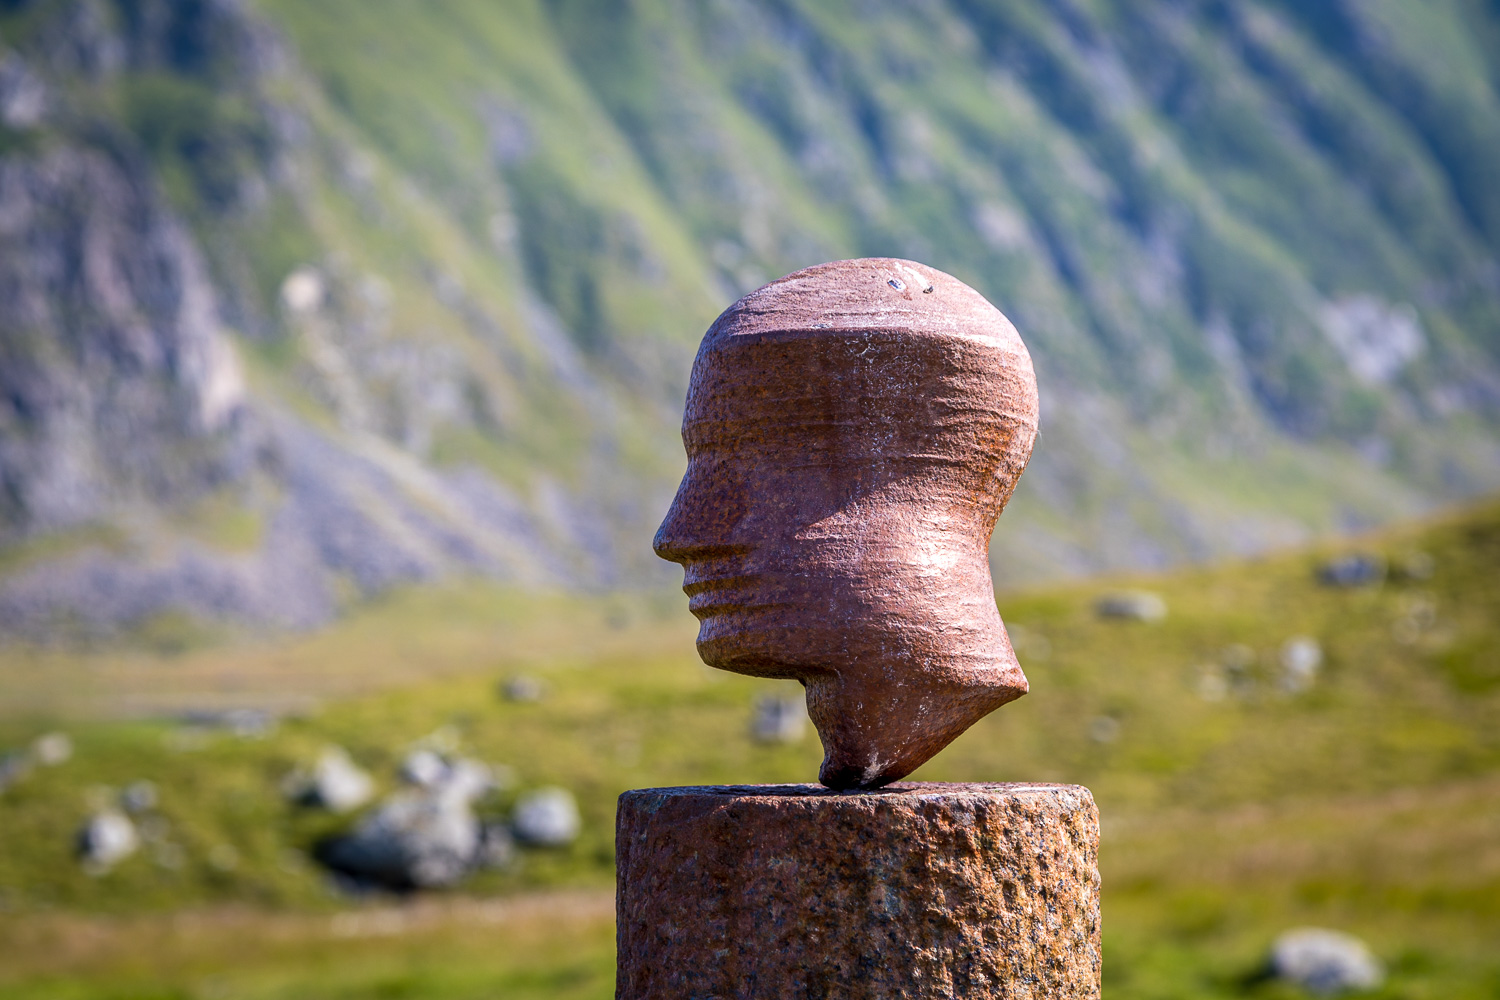 The 'Head' by Markus Raetz, Lofoten